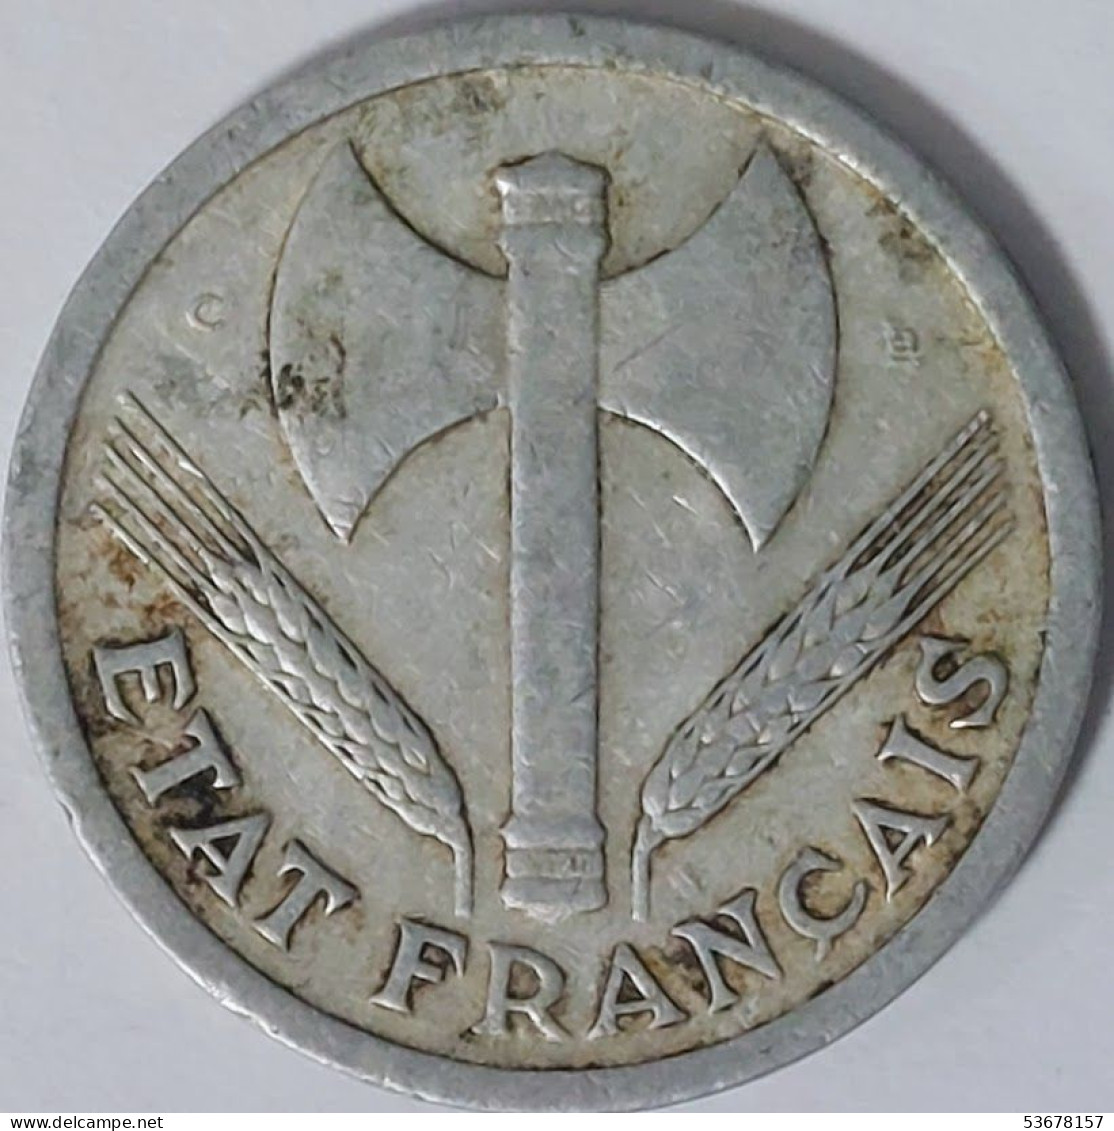 France - 2 Francs 1944 C, KM# 904.3 (#2473) - 2 Francs